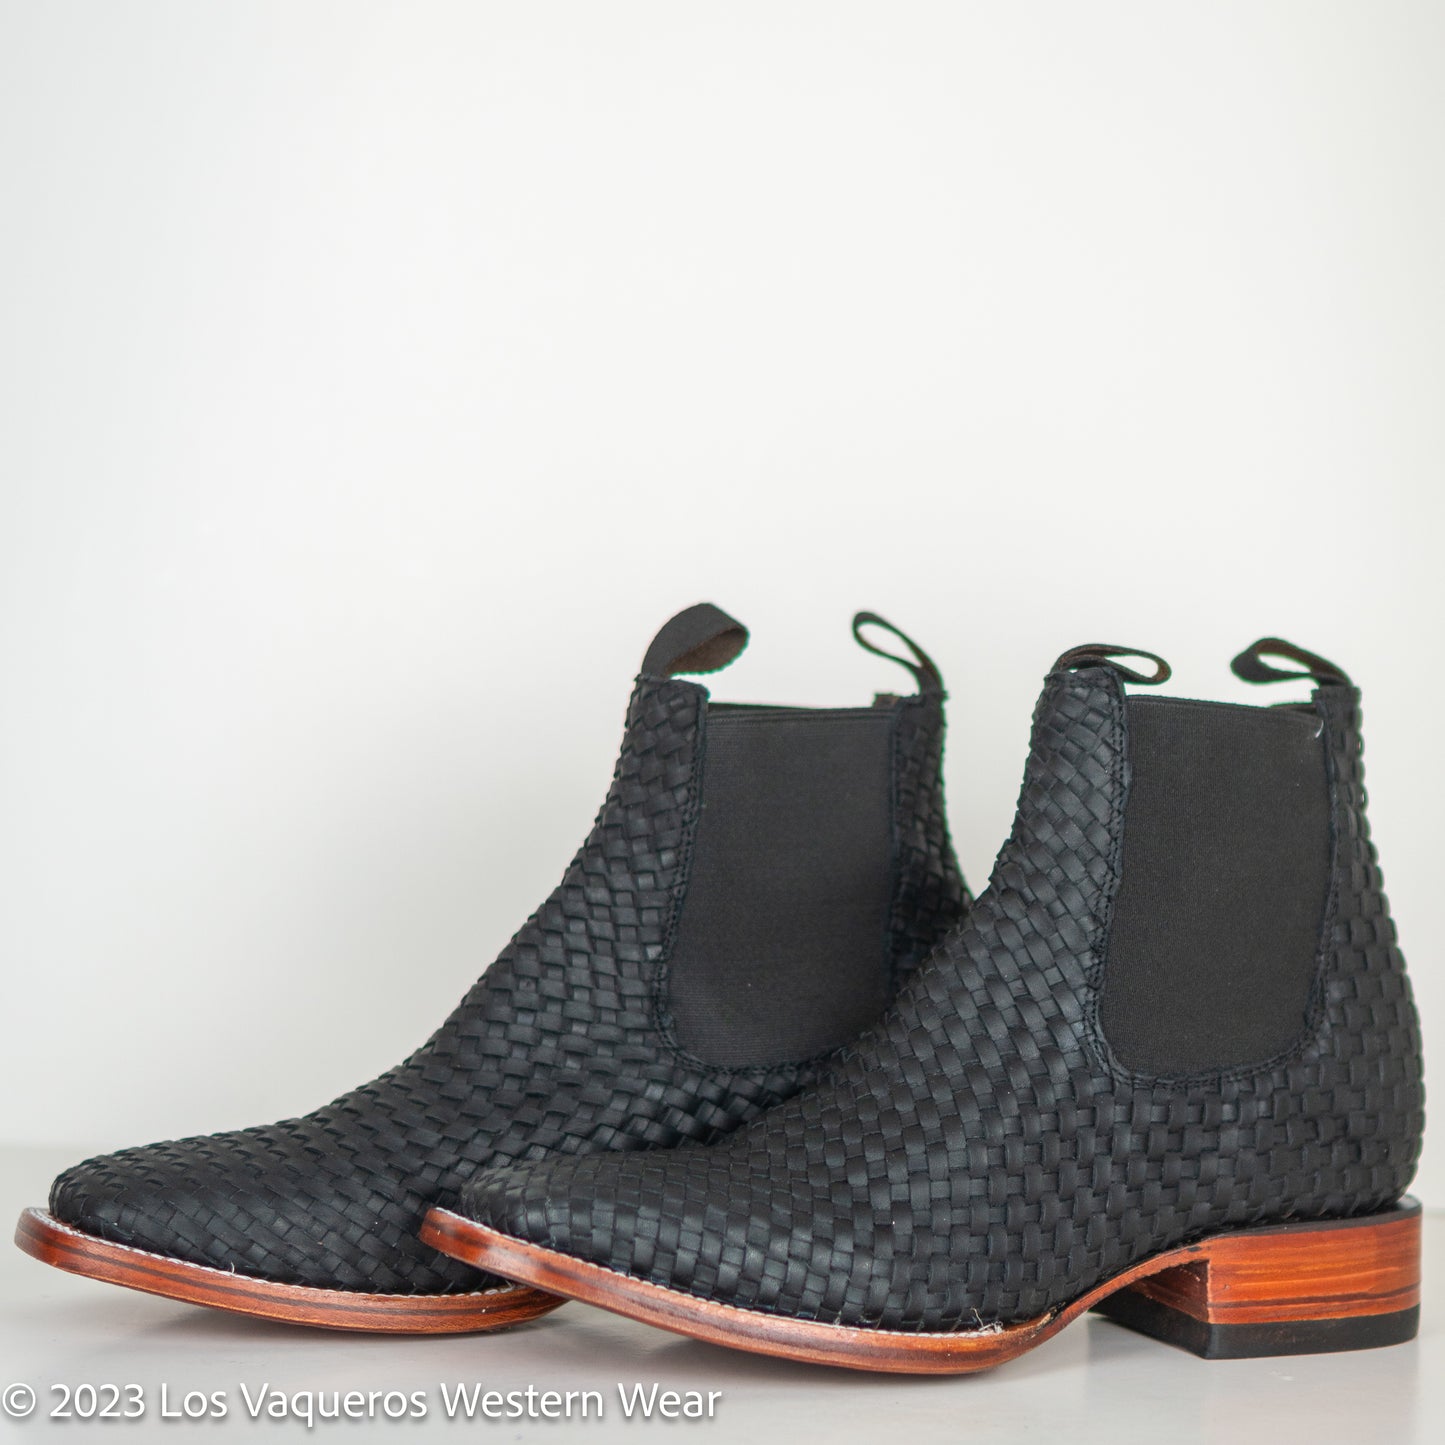 Calzatti Men's Welt Boots Woven Fabric Leather Black